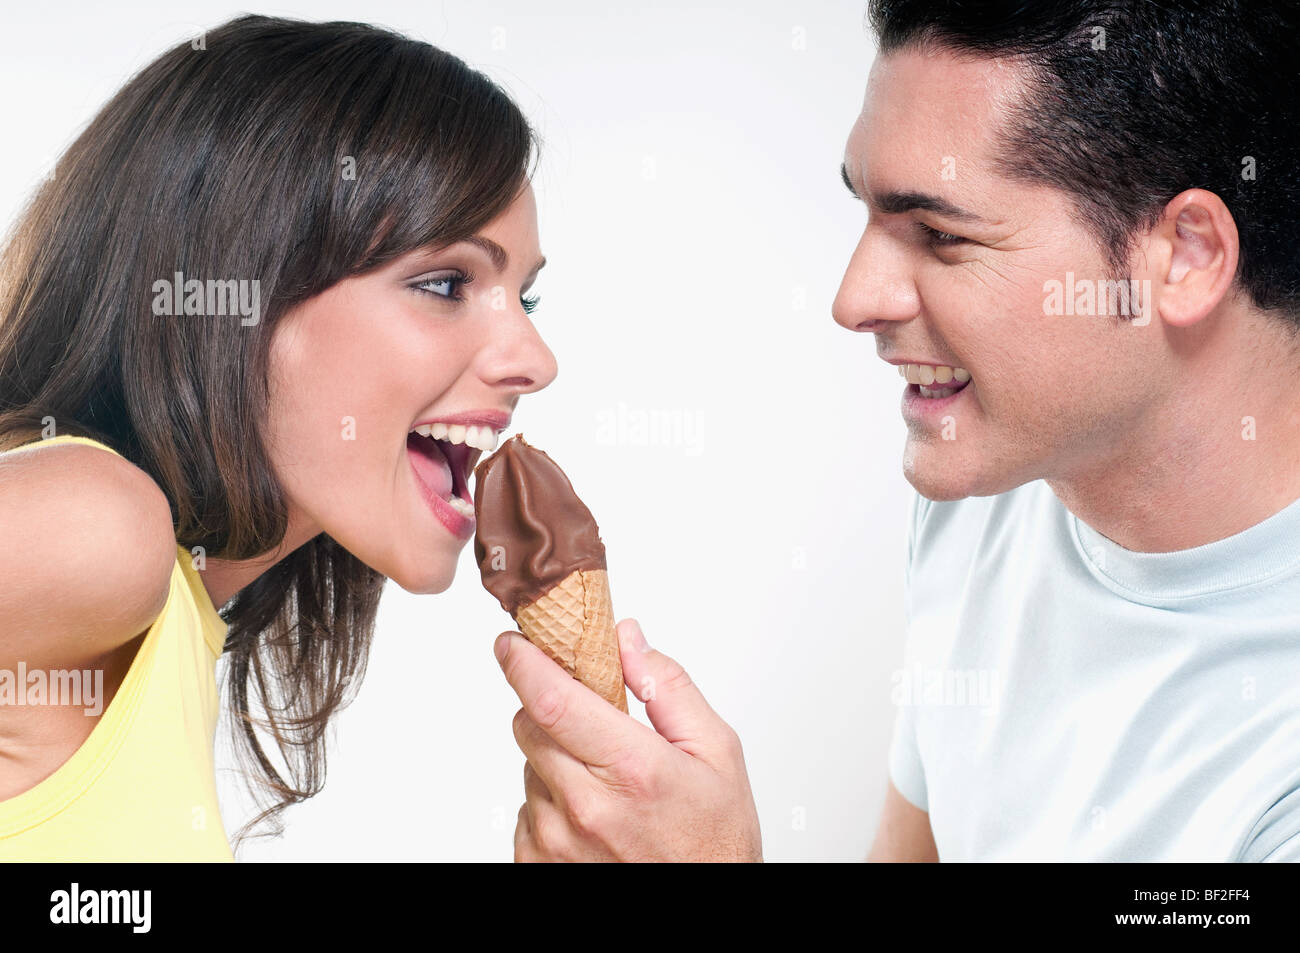 Couple sharing an ice cream cone Stock Photo